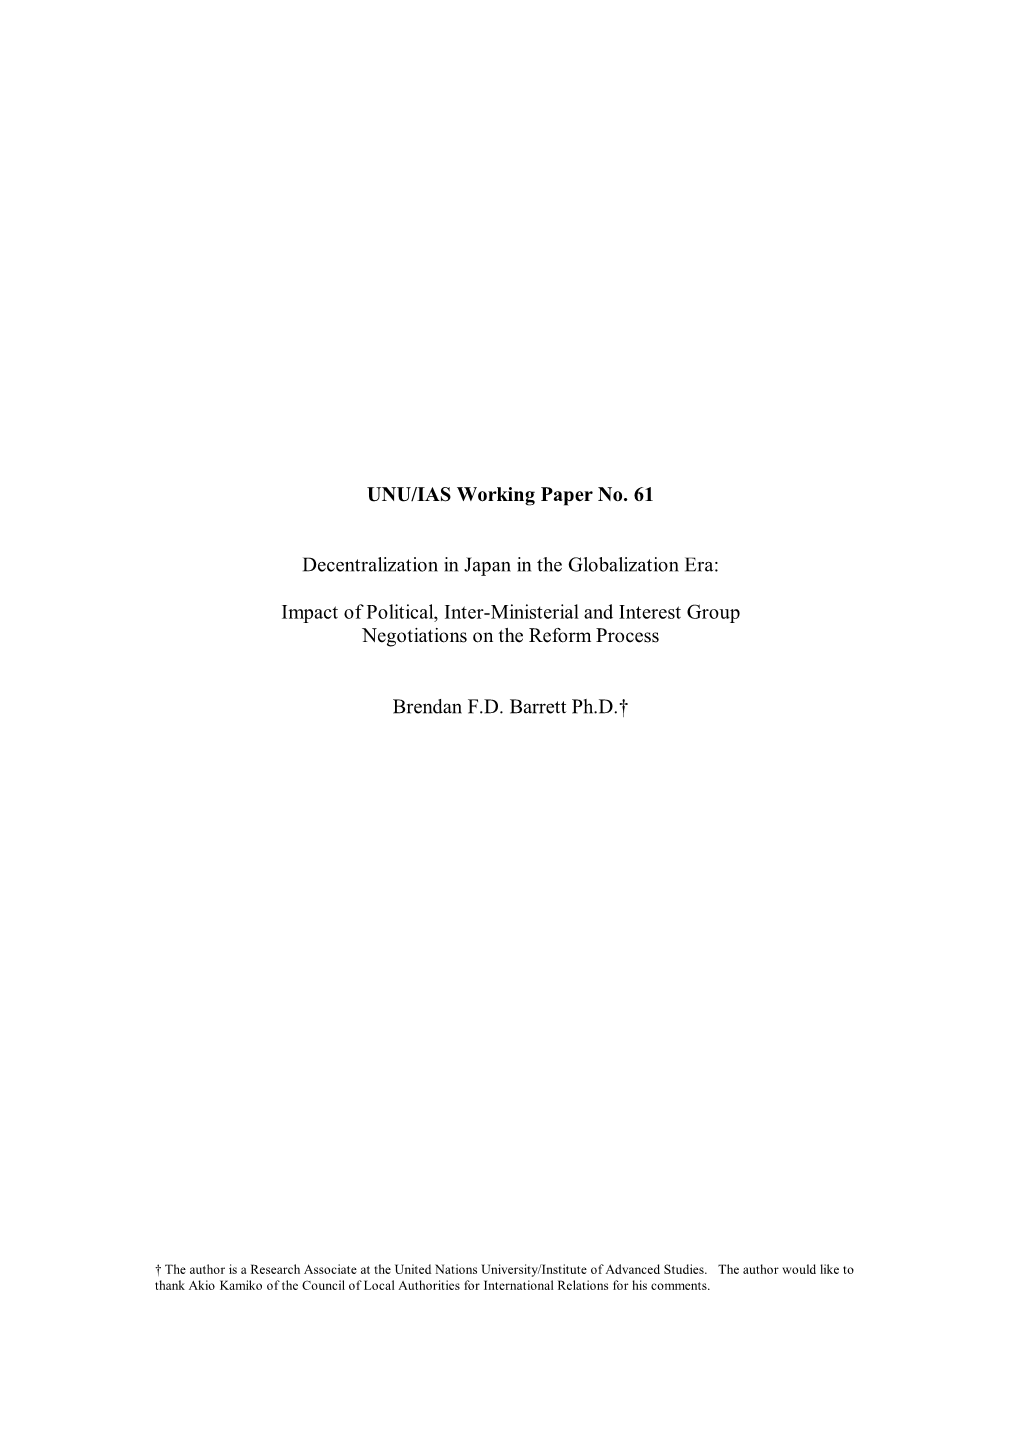 UNU/IAS Working Paper No. 61 Decentralization in Japan in The